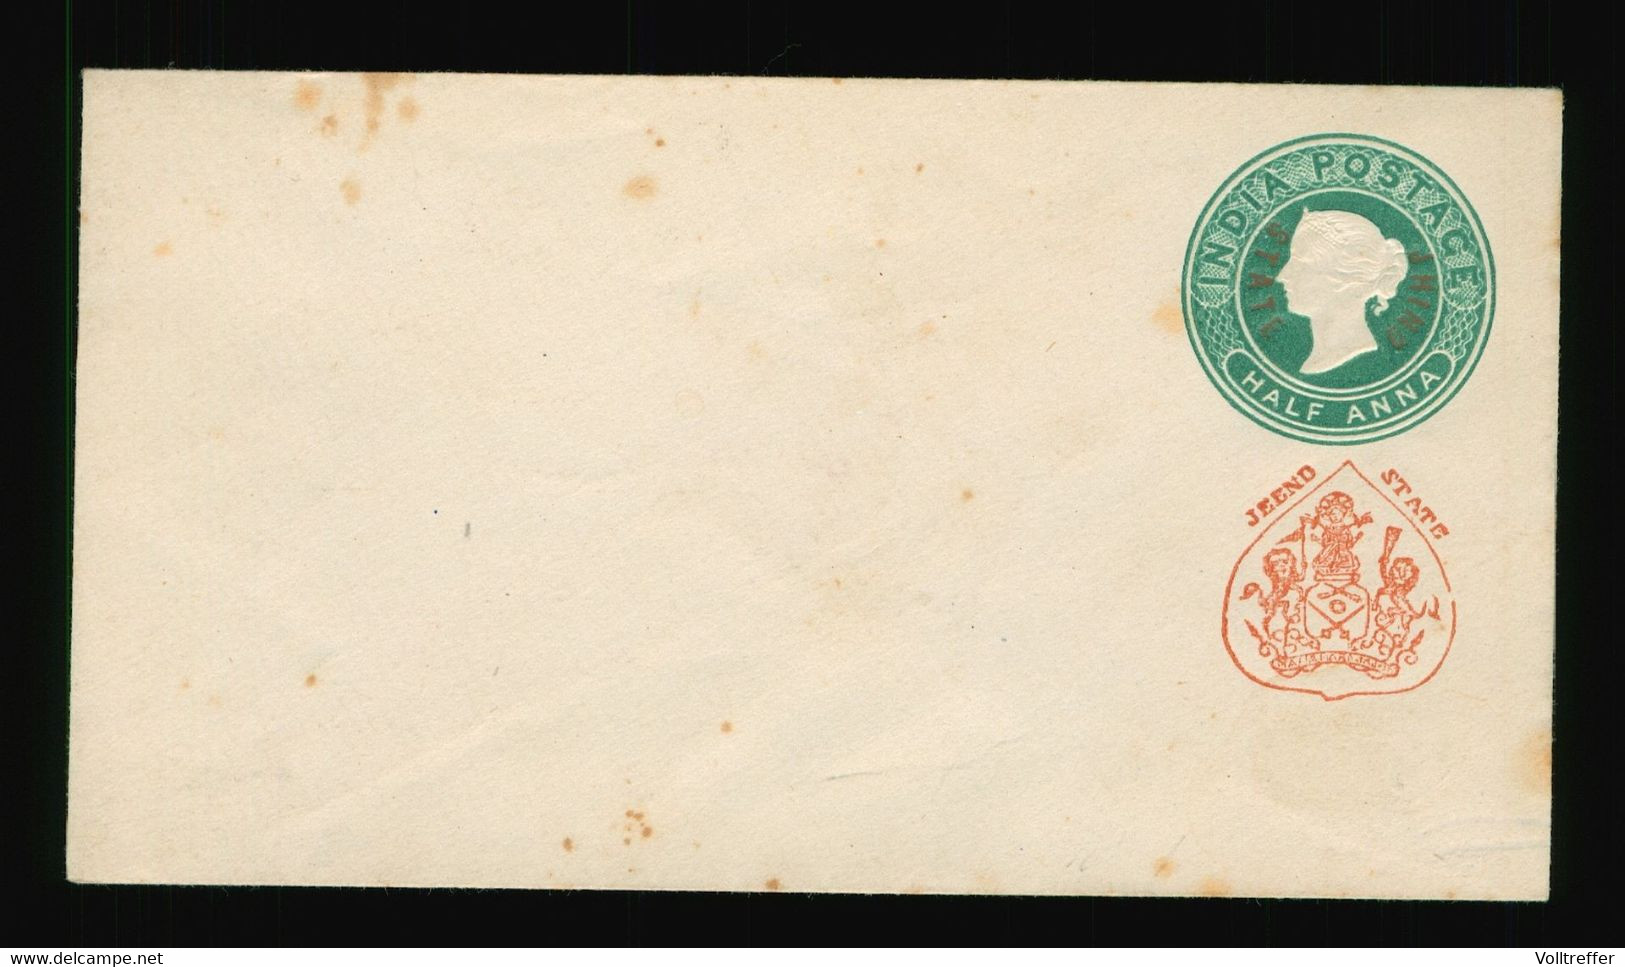 Ganzsache Umschlag Envelope Indien India Postage Stempel Jeend State Jhind State Half Anna - Covers